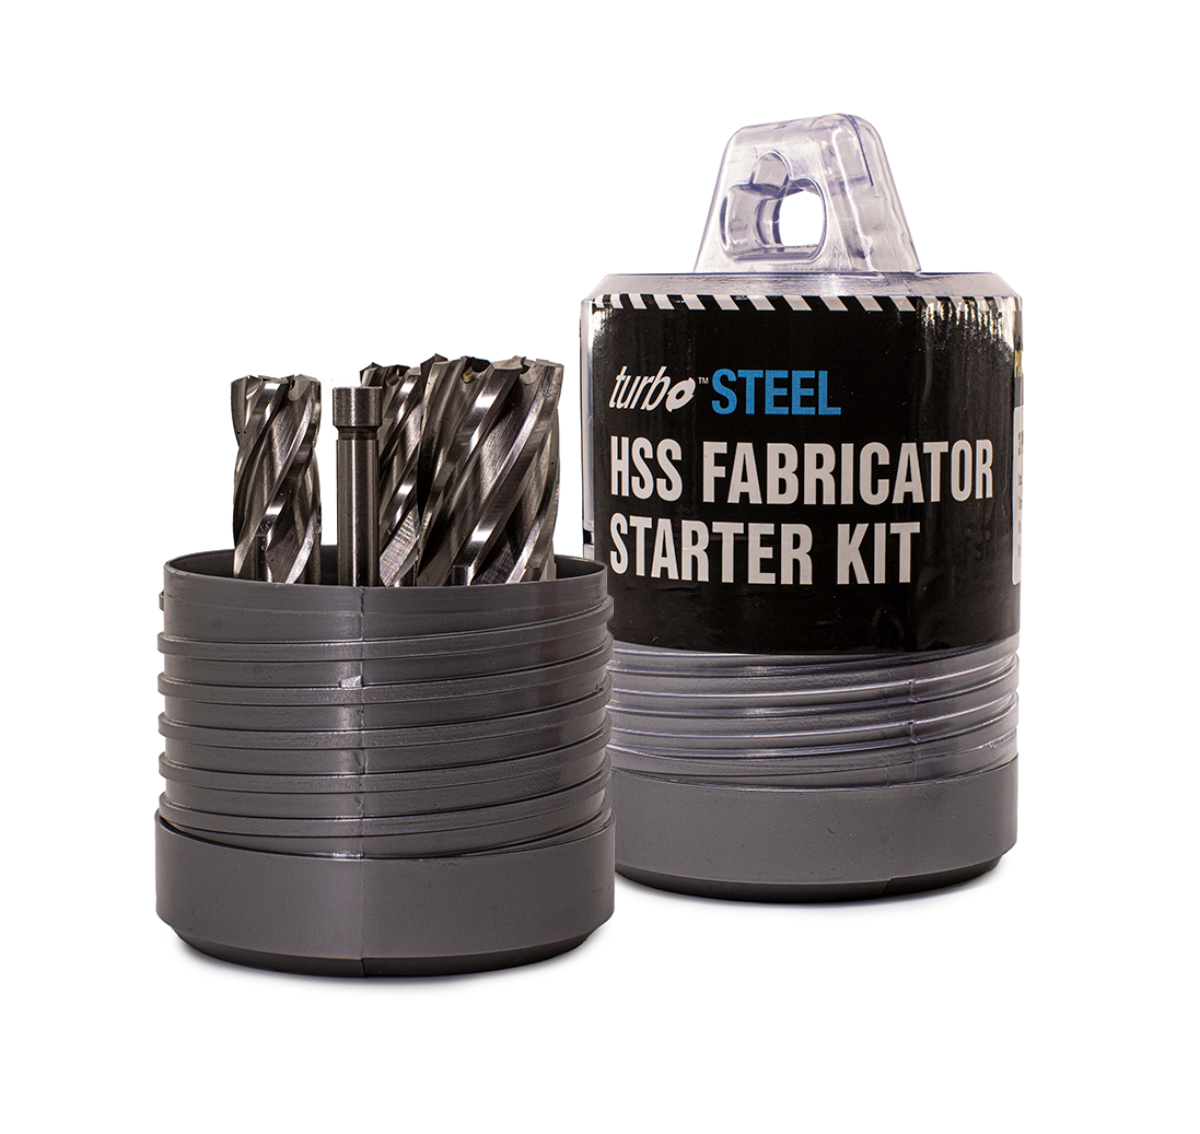 3 Piece Turbo™ Steel Cutter Fabricator Starter Kit